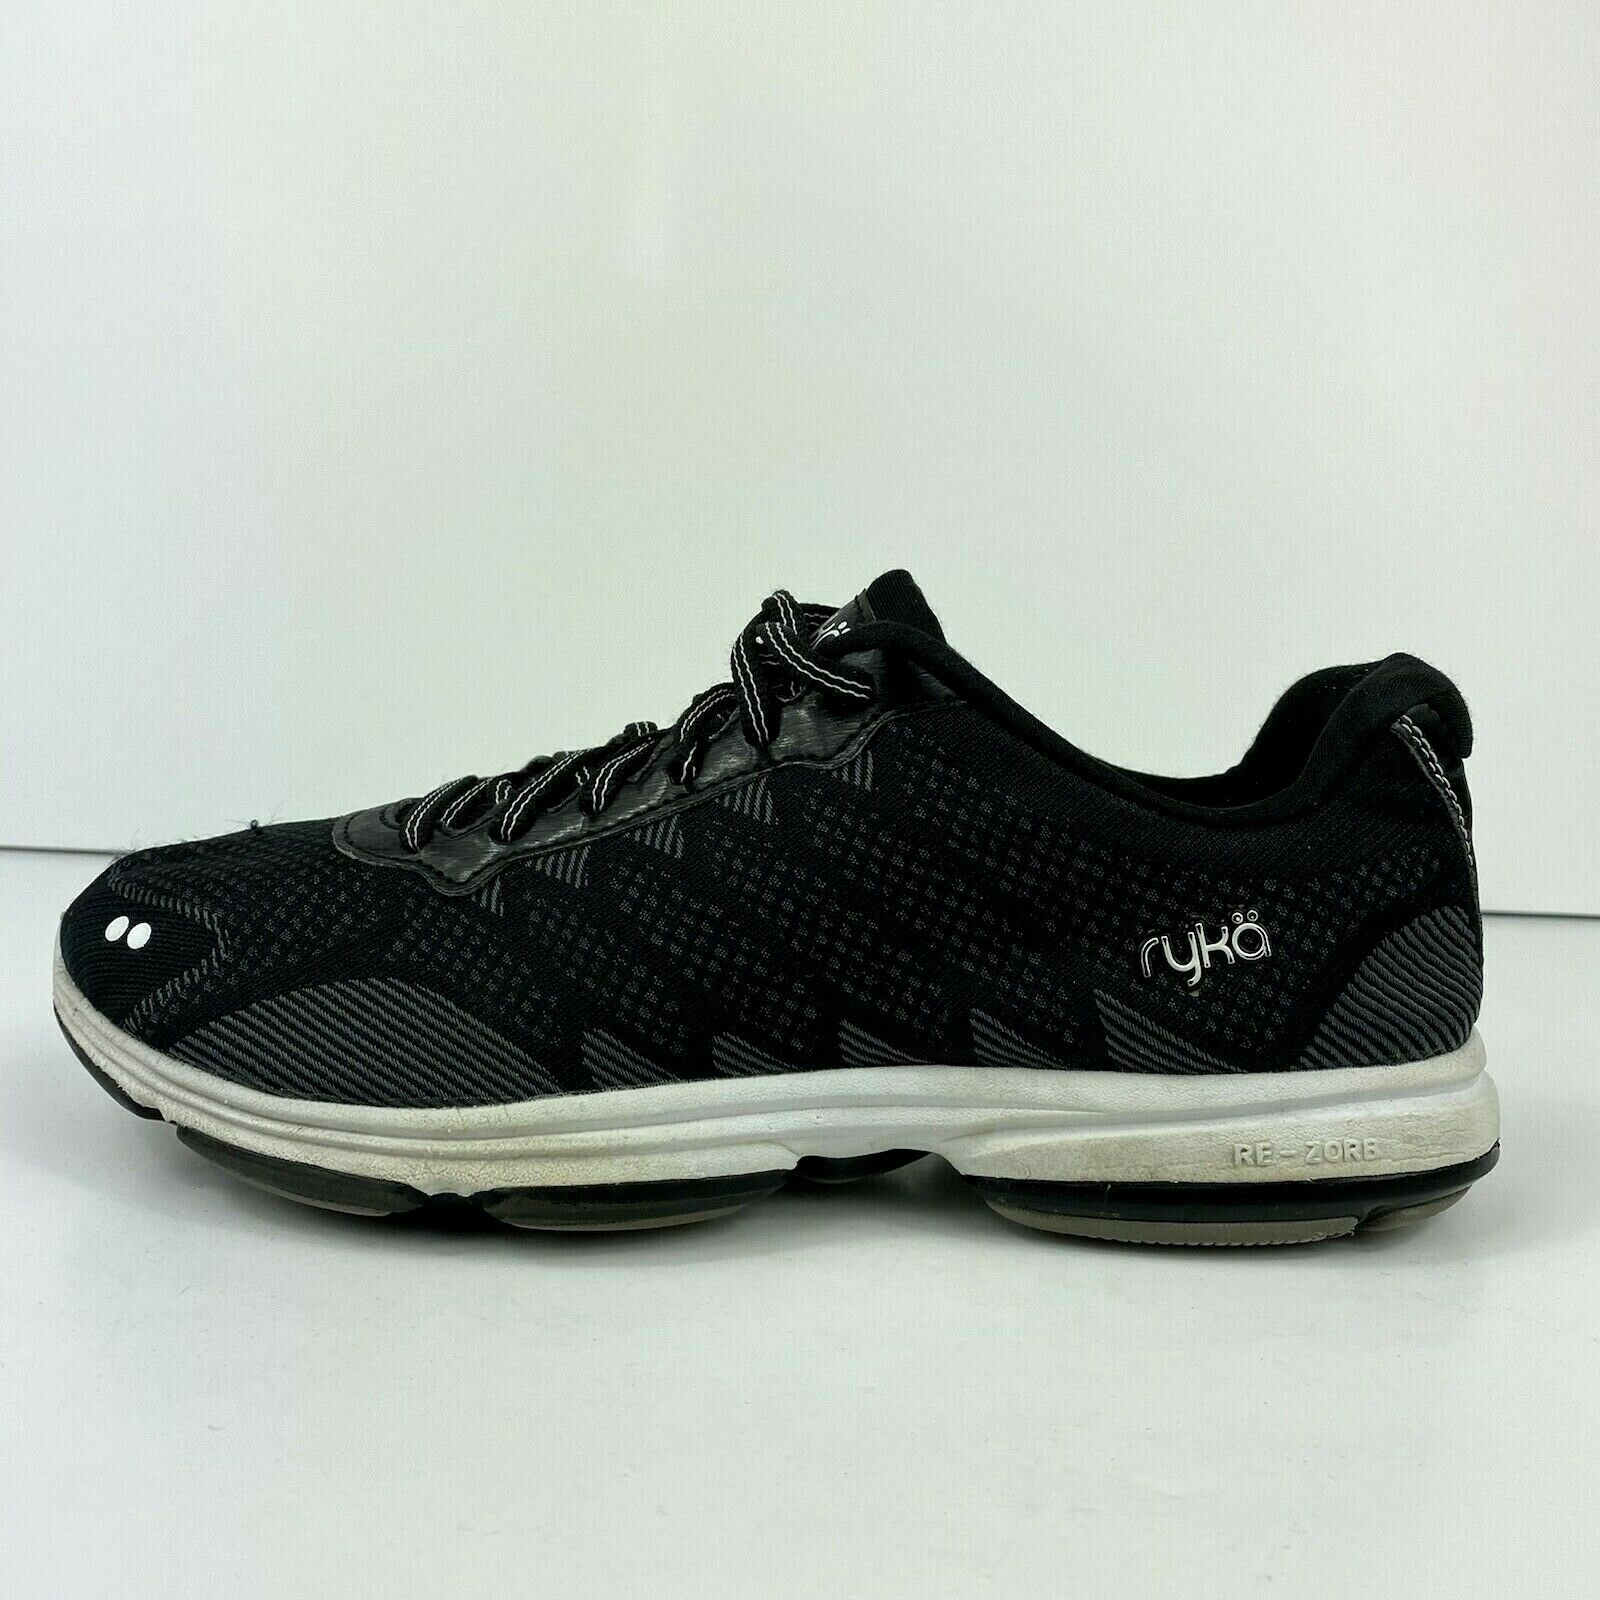 Ryka Dominion Walking Shoes Women's Size 9.5W Black Comfortable Lightweight